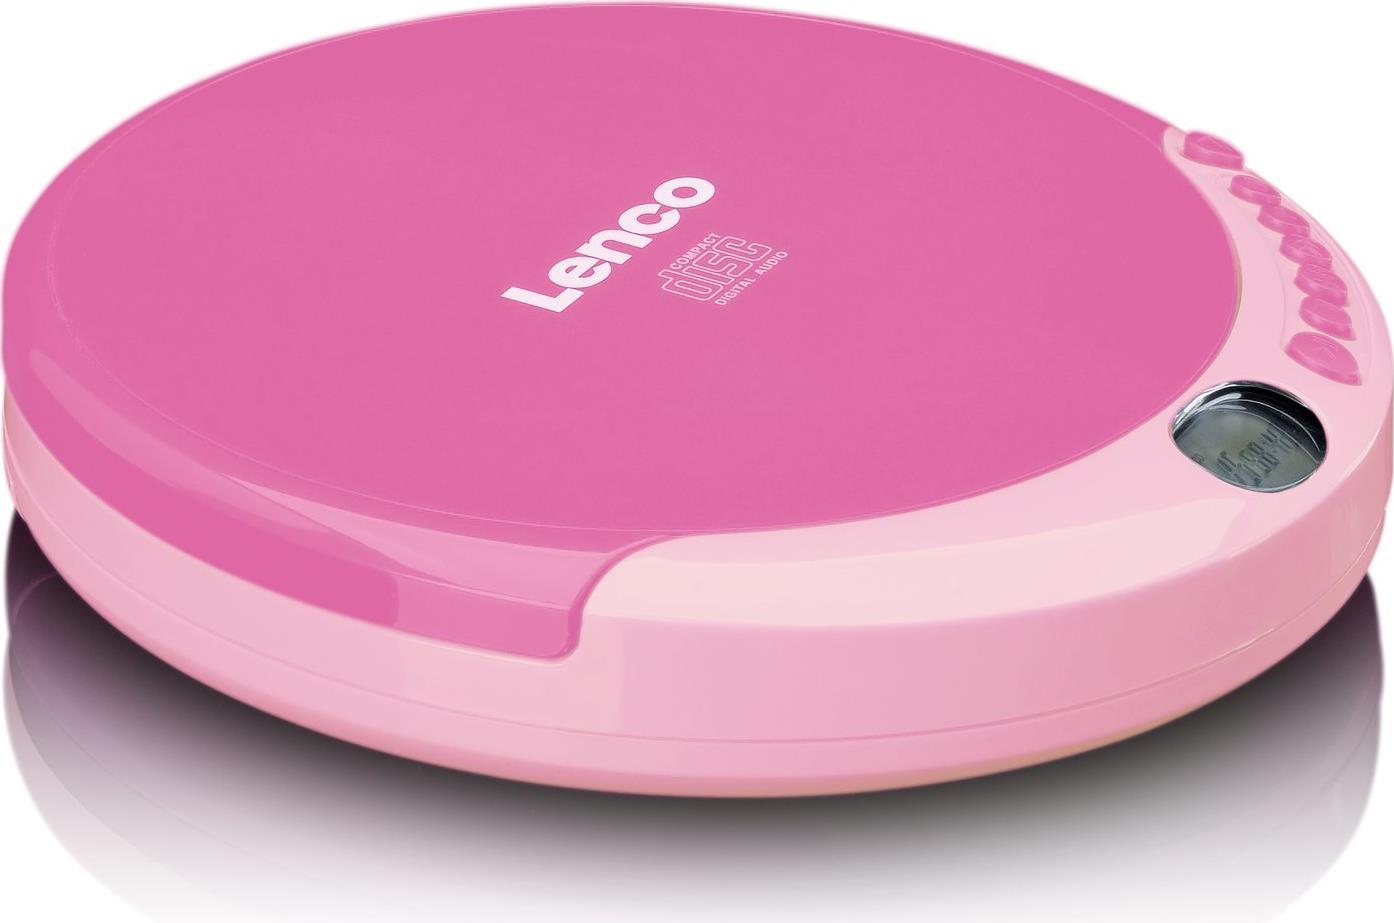 Lenco CD-011 Tragbarer CD-Player Pink (CD-011PINK)